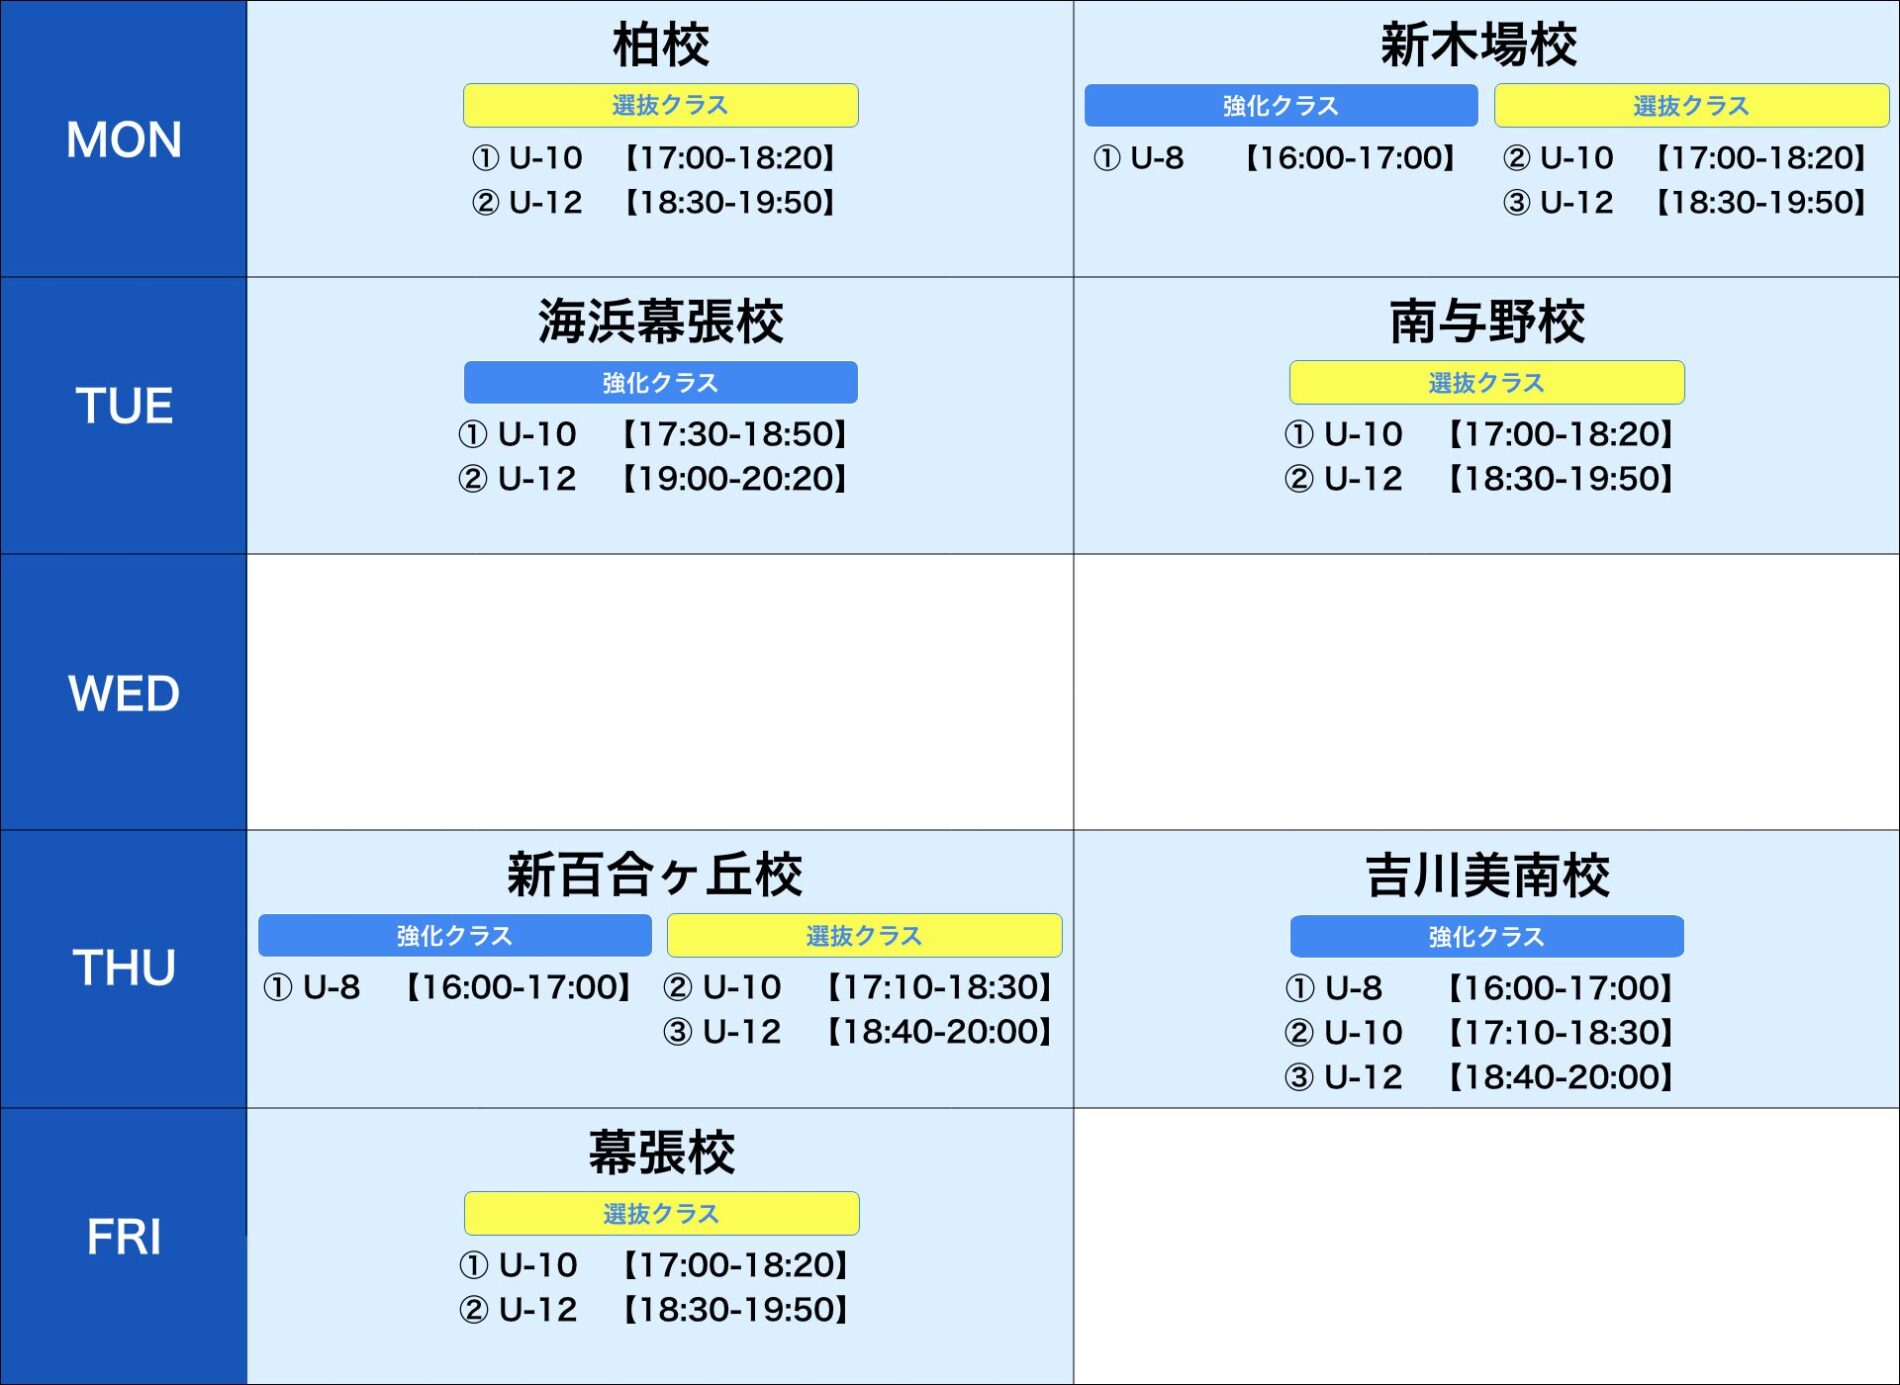 weekly_schedule